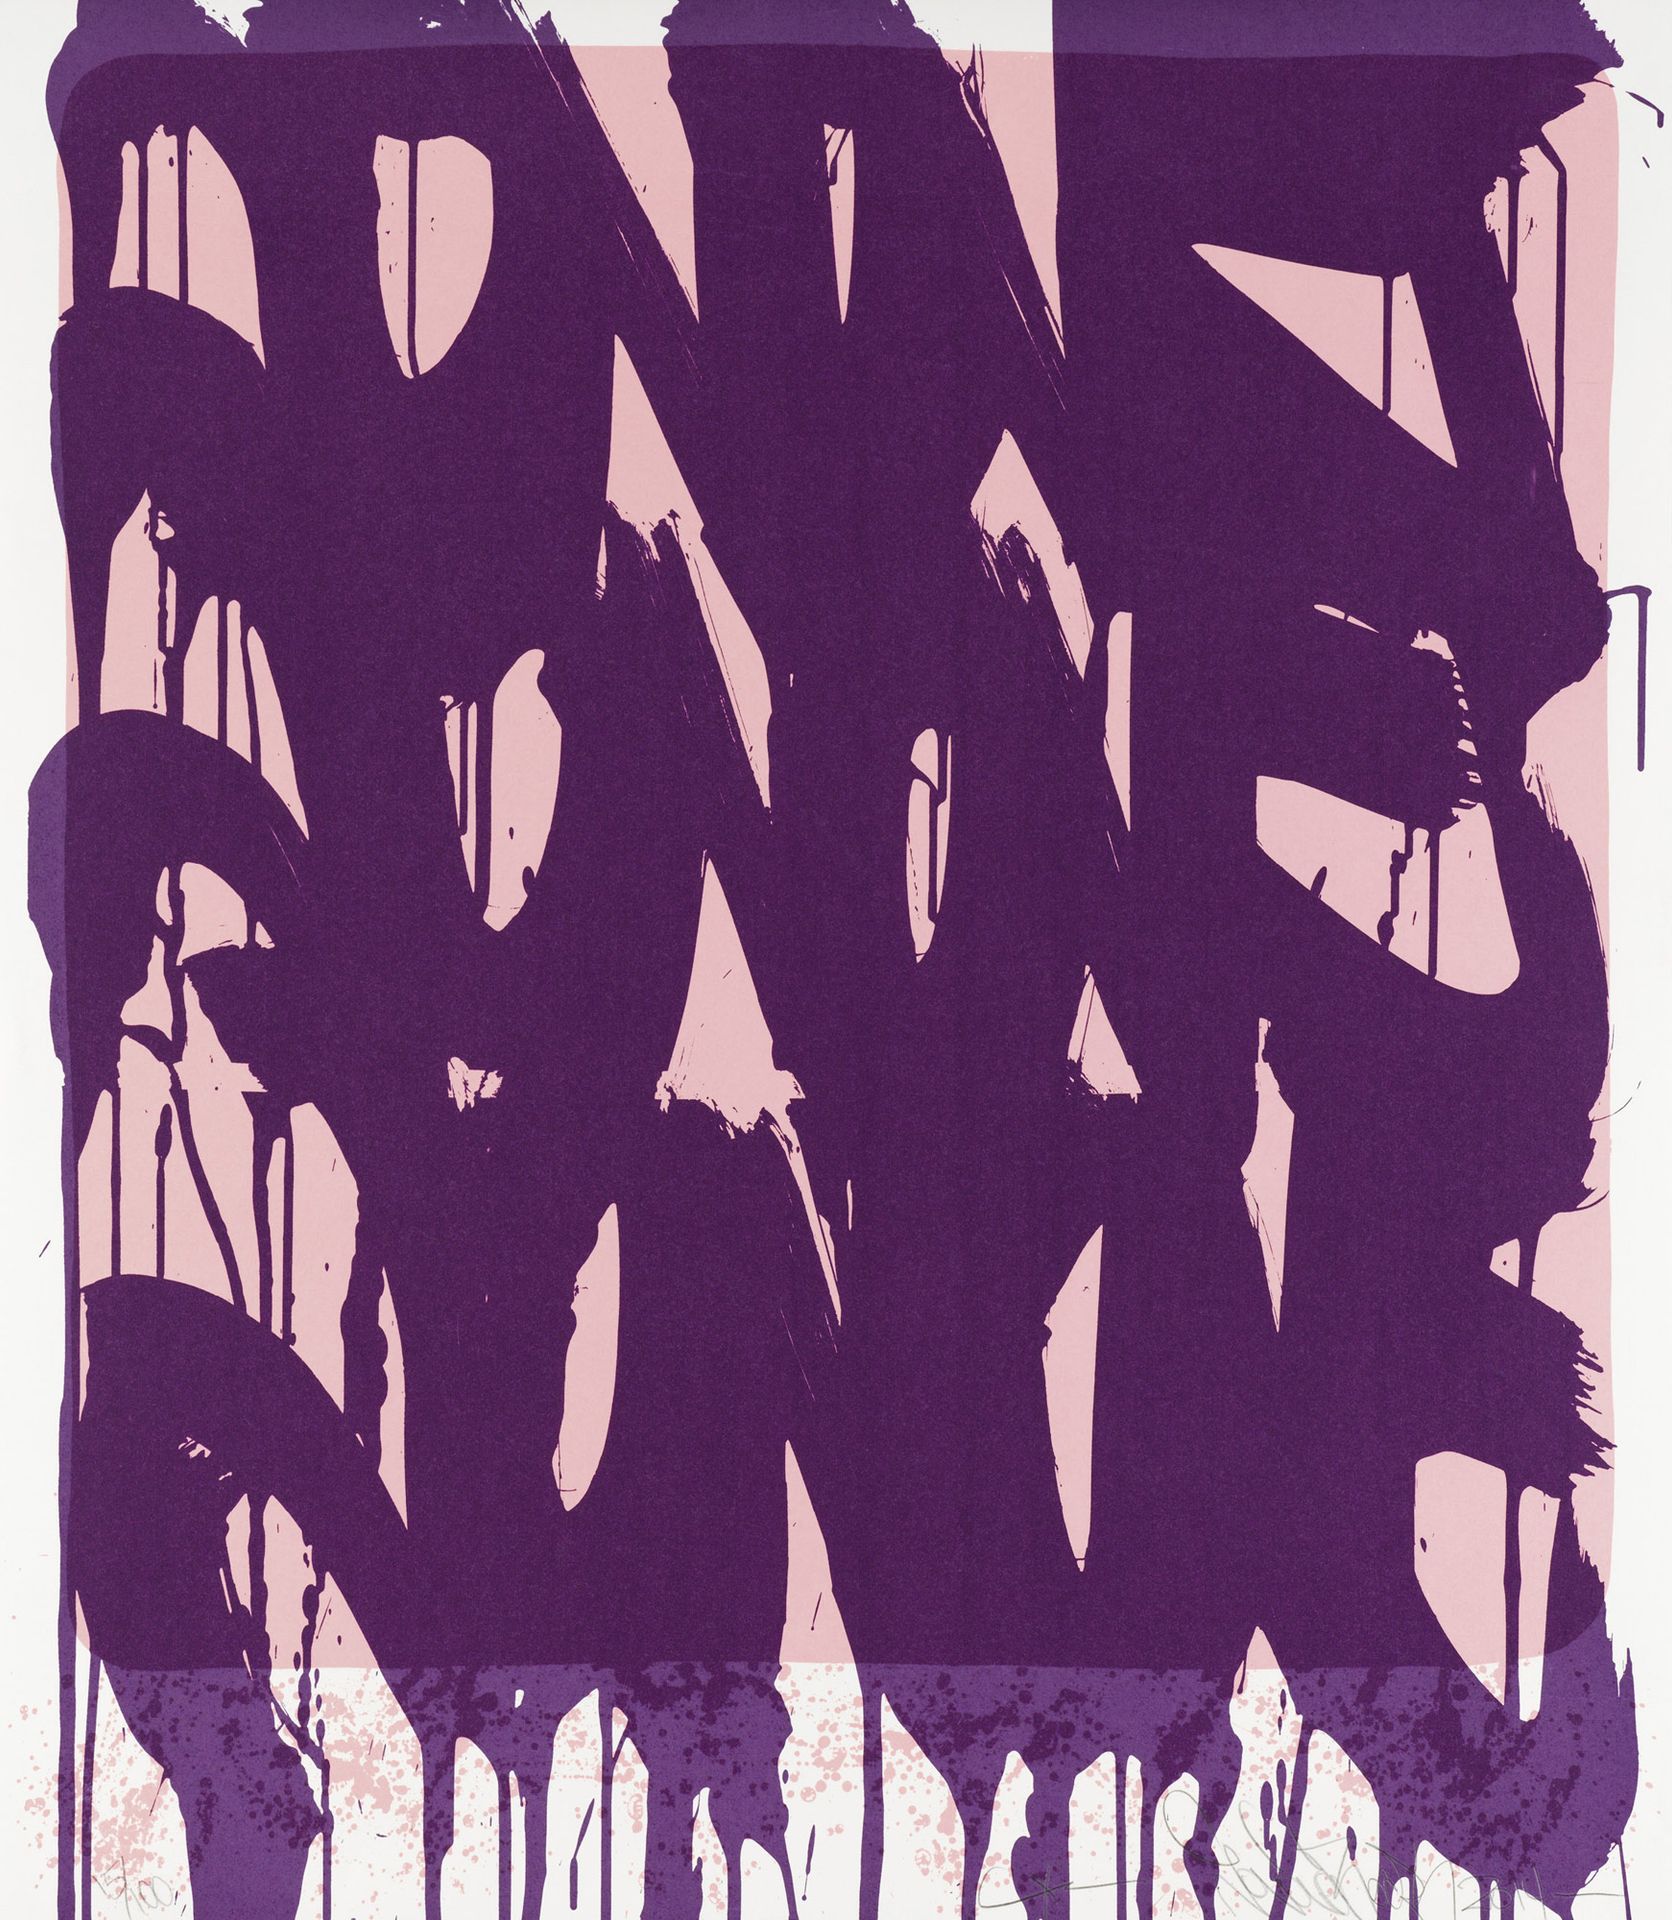 JONONE (ANDREW PERELLO DIT) (NE EN 1963) DRIPPING TAGS, 2014
纸上丝网印刷
有签名、日期和编号的15&hellip;